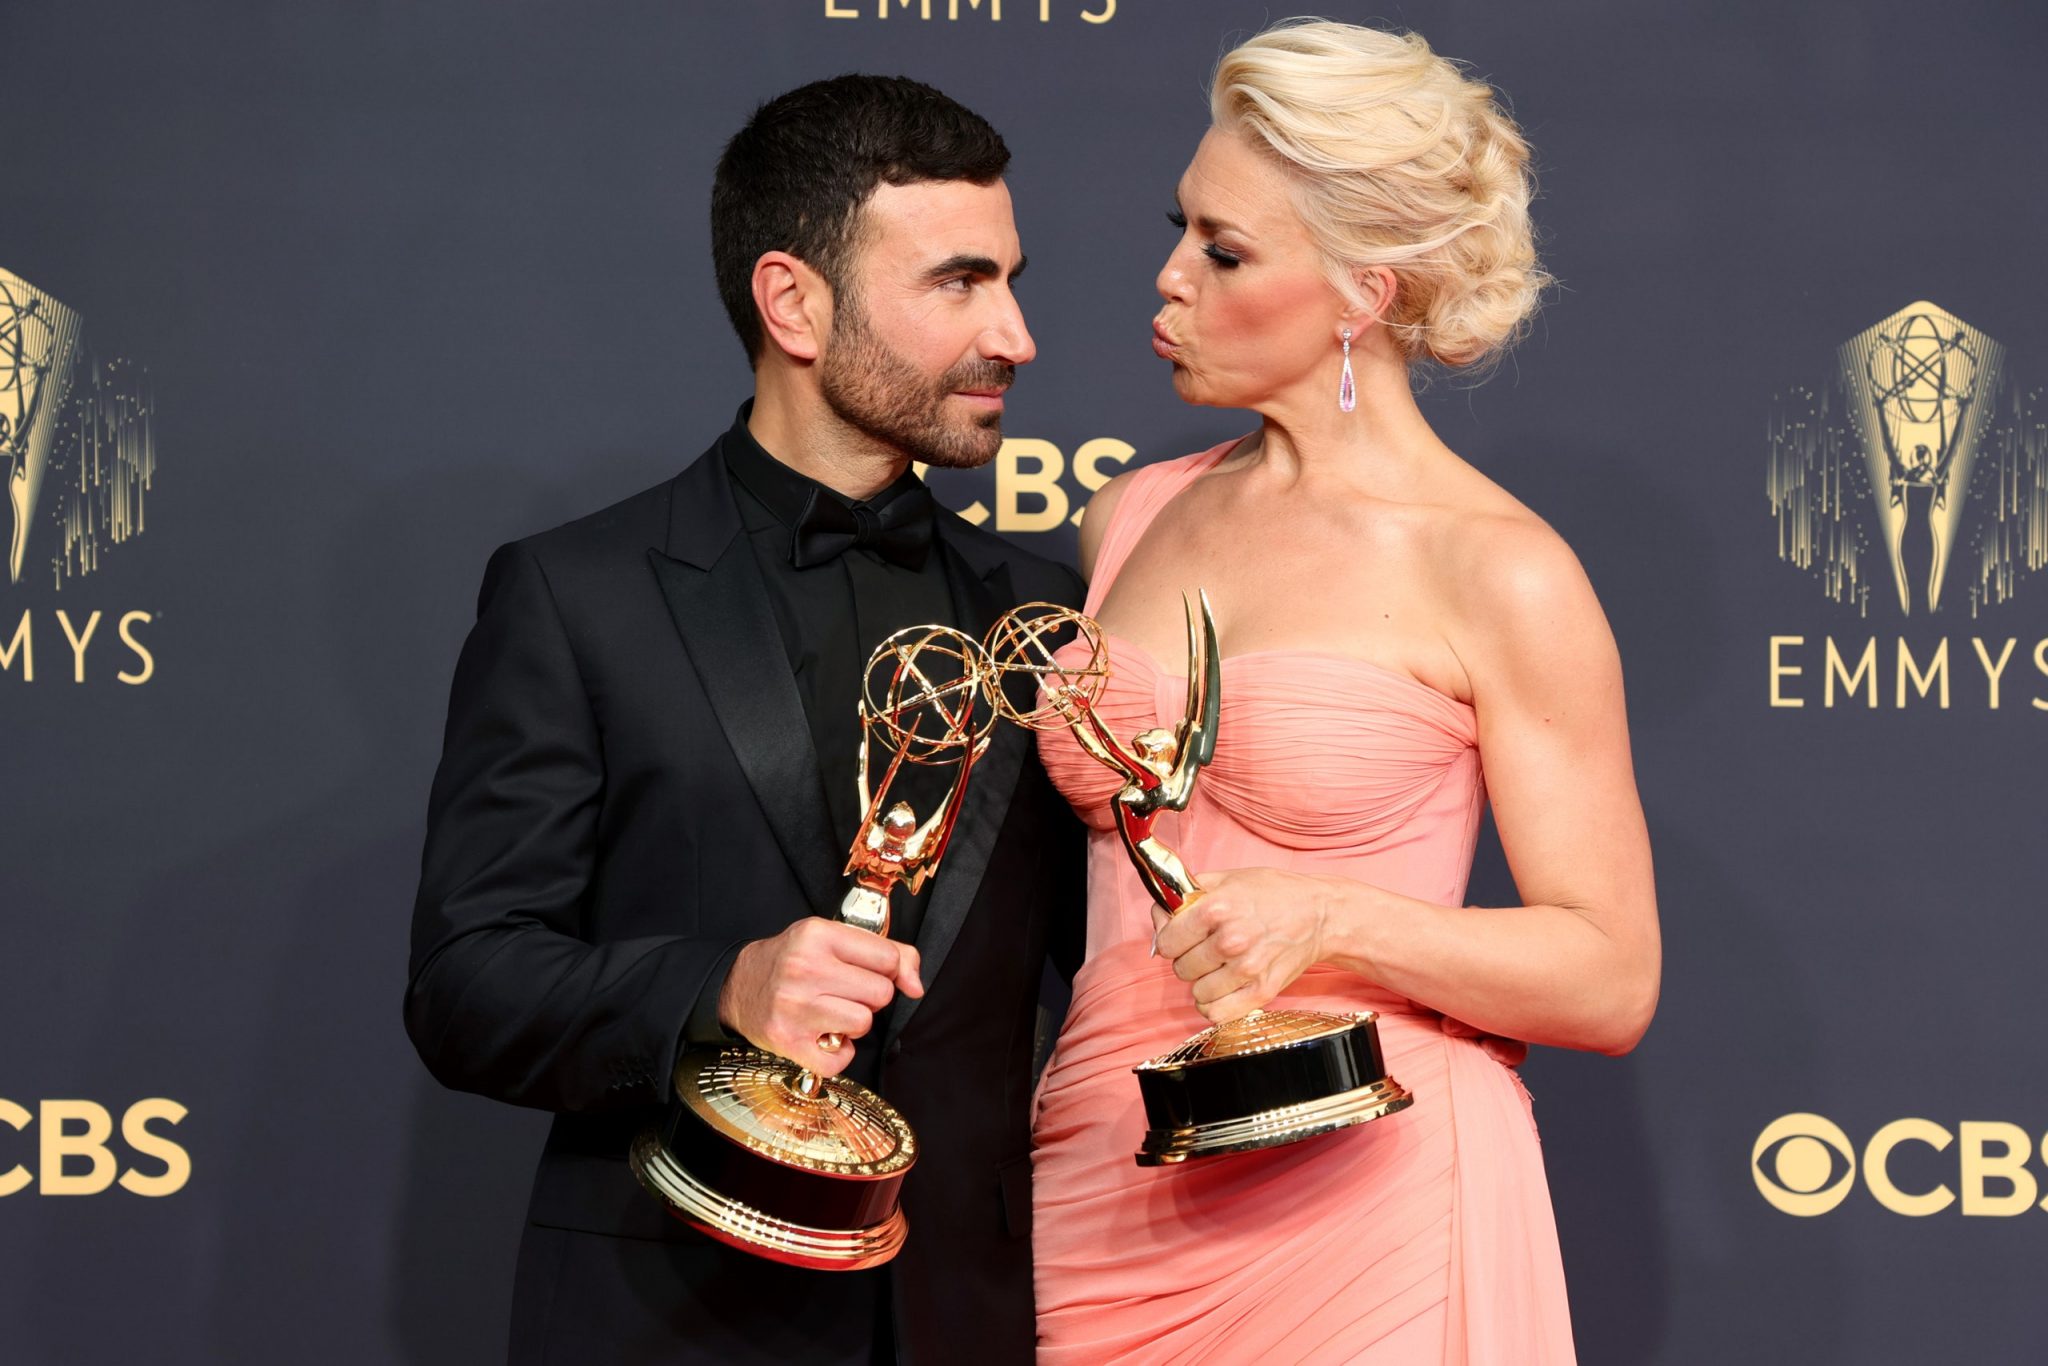 Emmy Awards 2021 Full List Of Winners ABTC